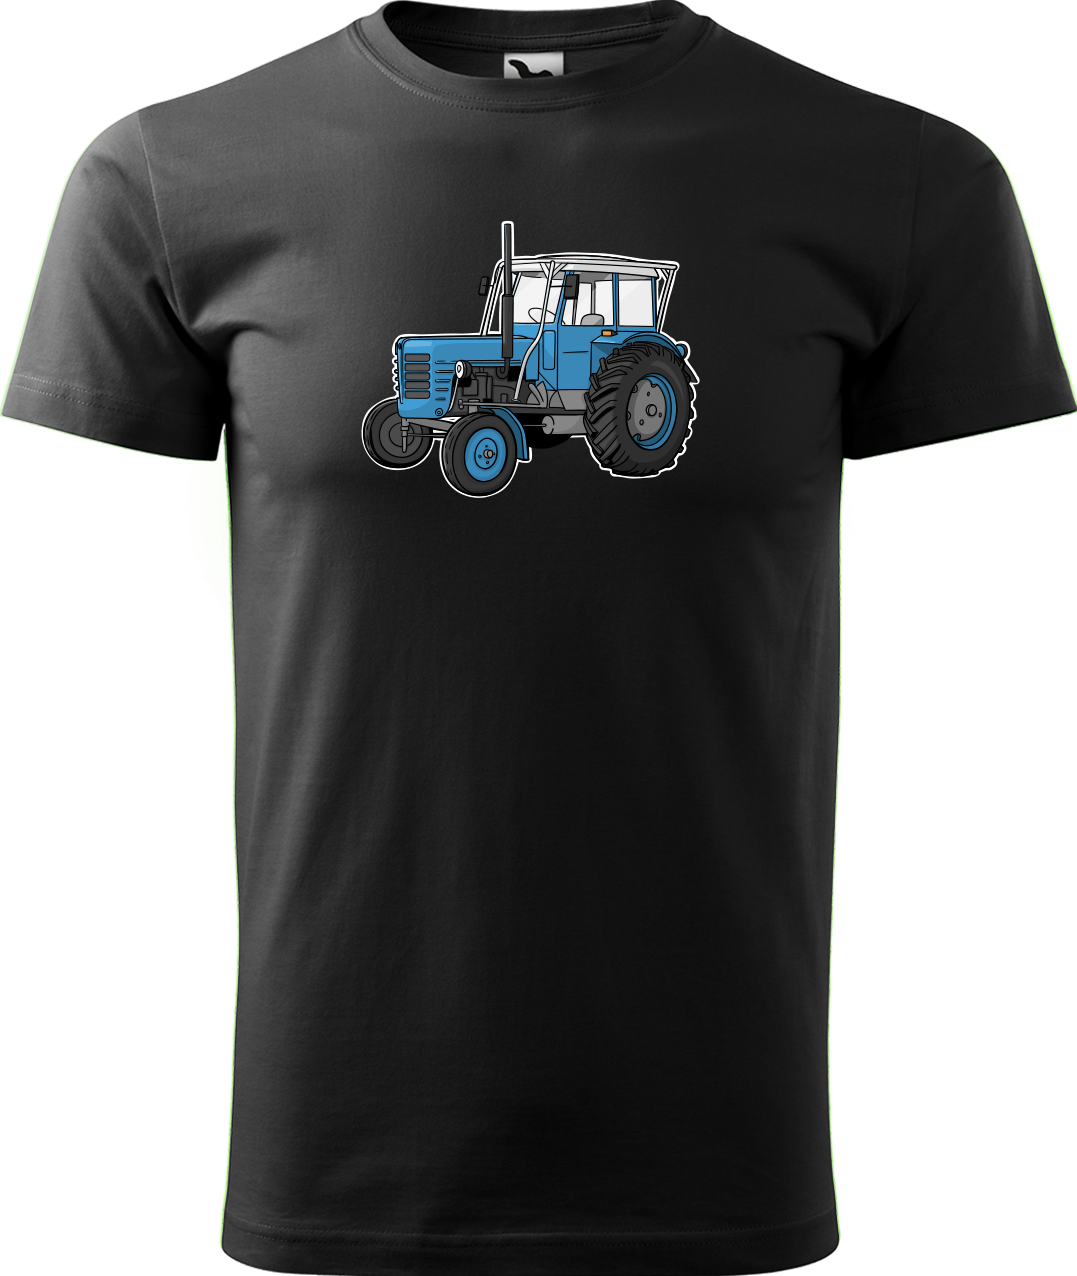 Tričko s traktorem - Starý traktor Velikost: S, Barva: Černá (01)